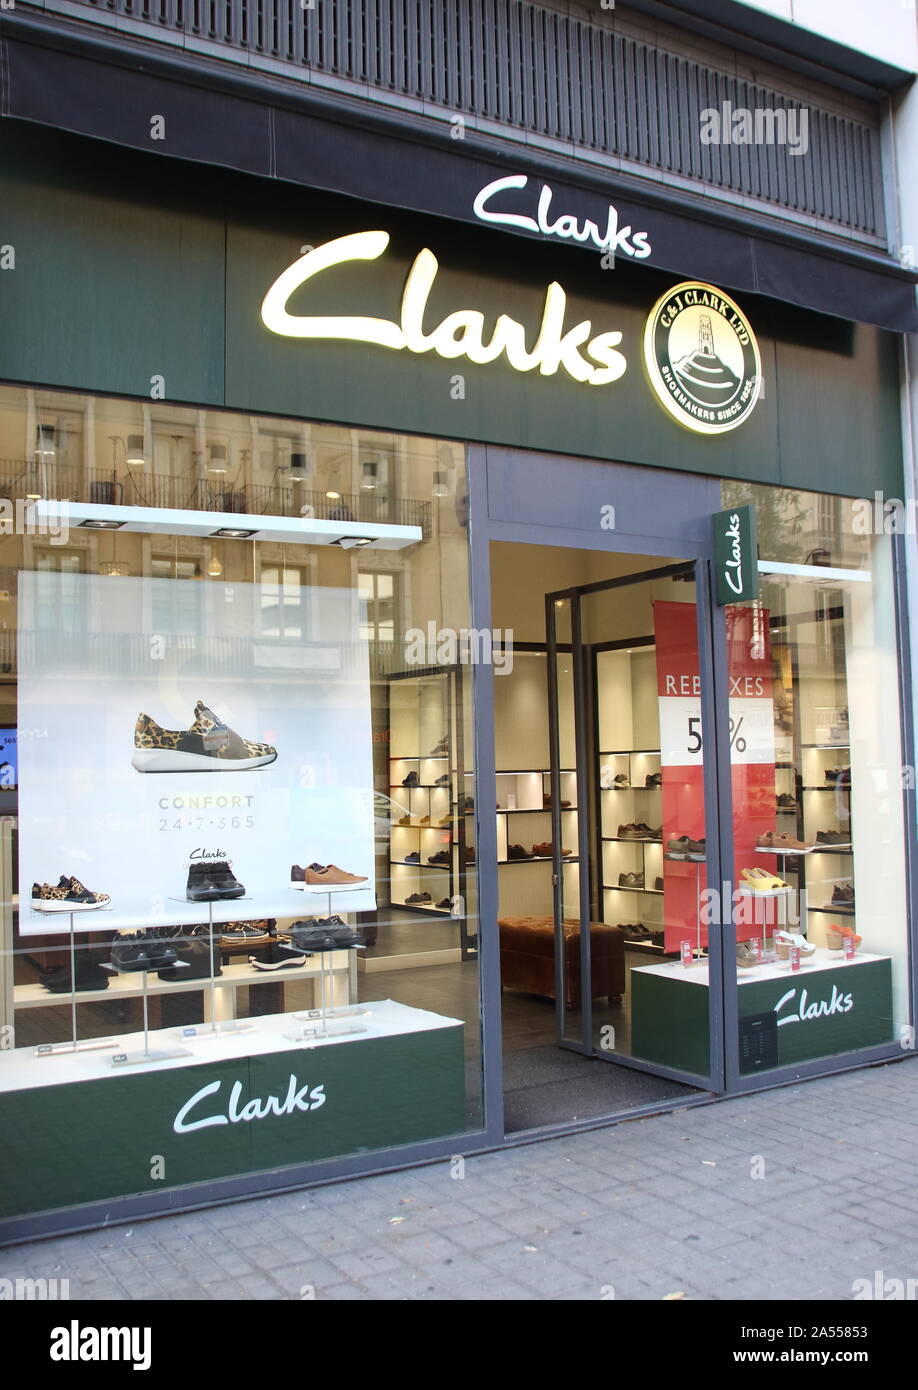 Magasin de chaussures Clarks vu à Barcelone Photo Stock - Alamy